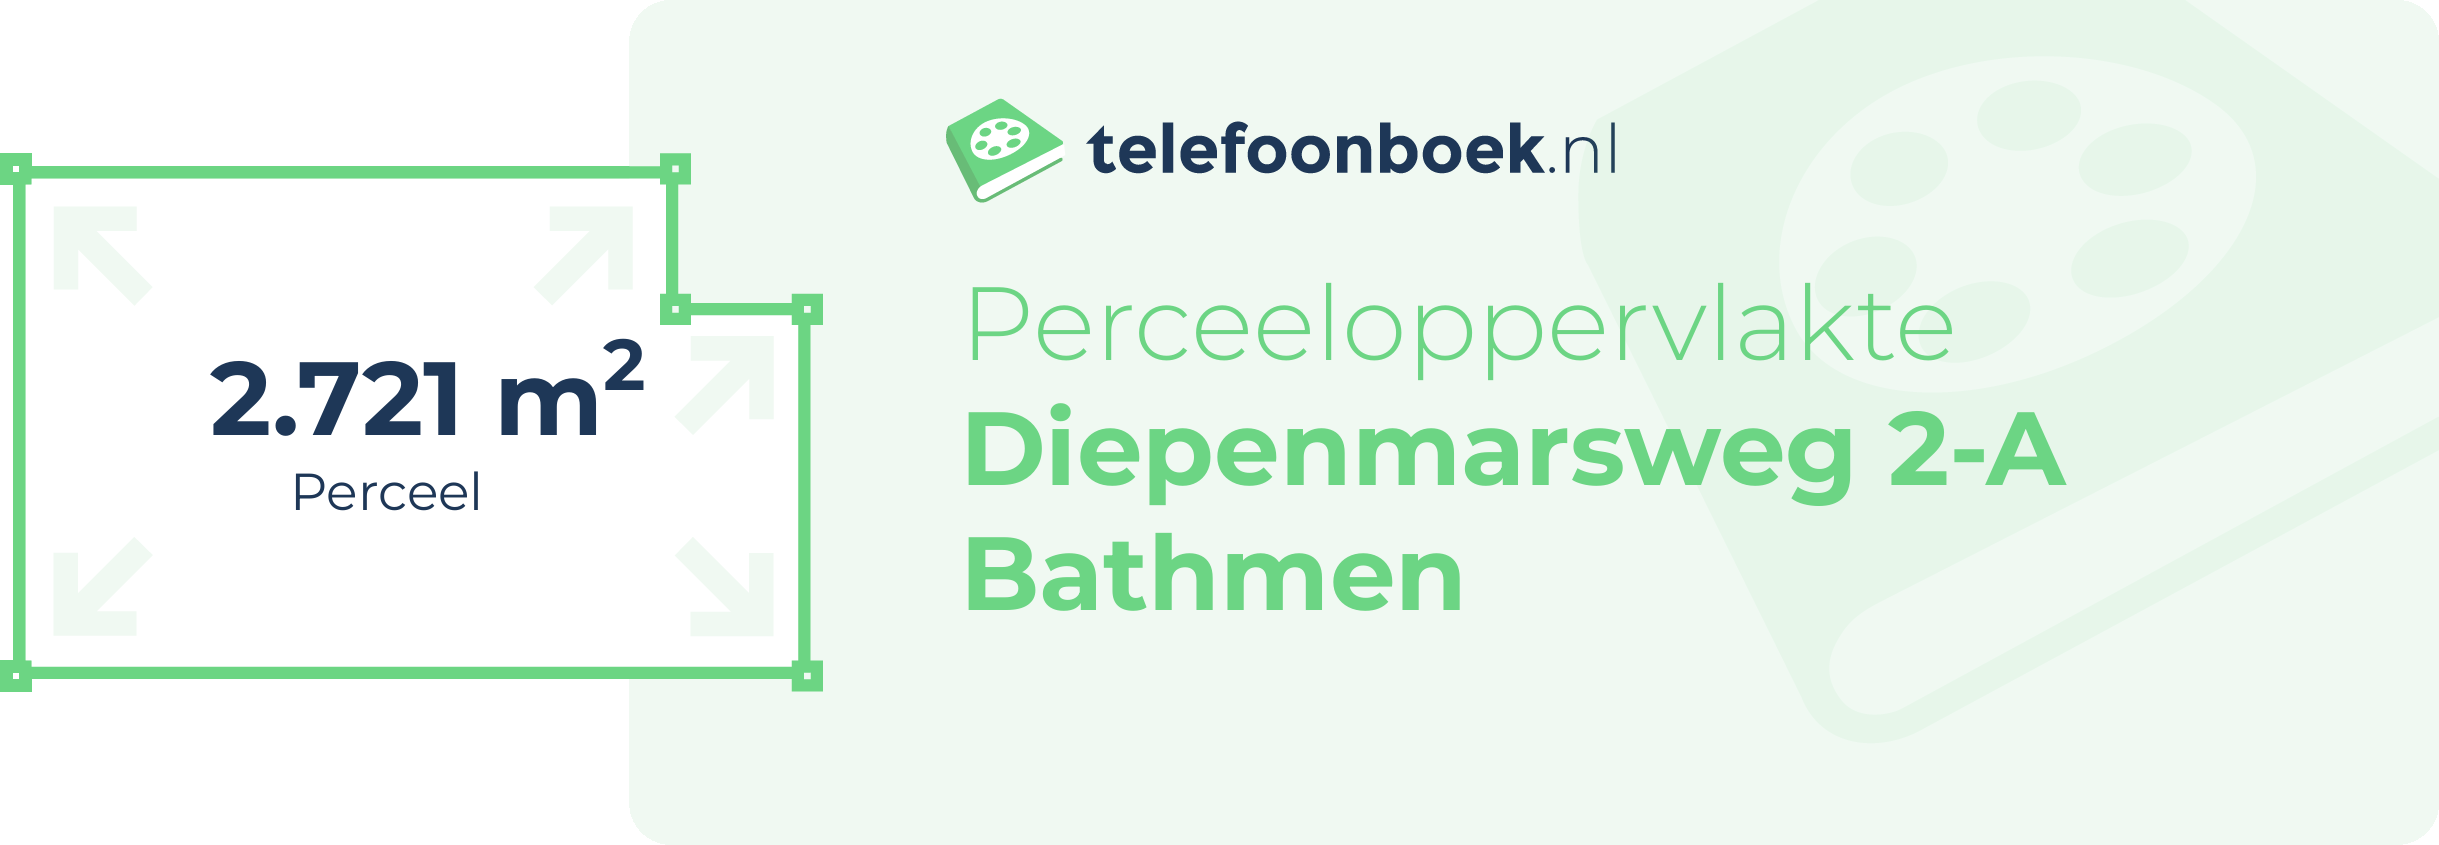 Perceeloppervlakte Diepenmarsweg 2-A Bathmen